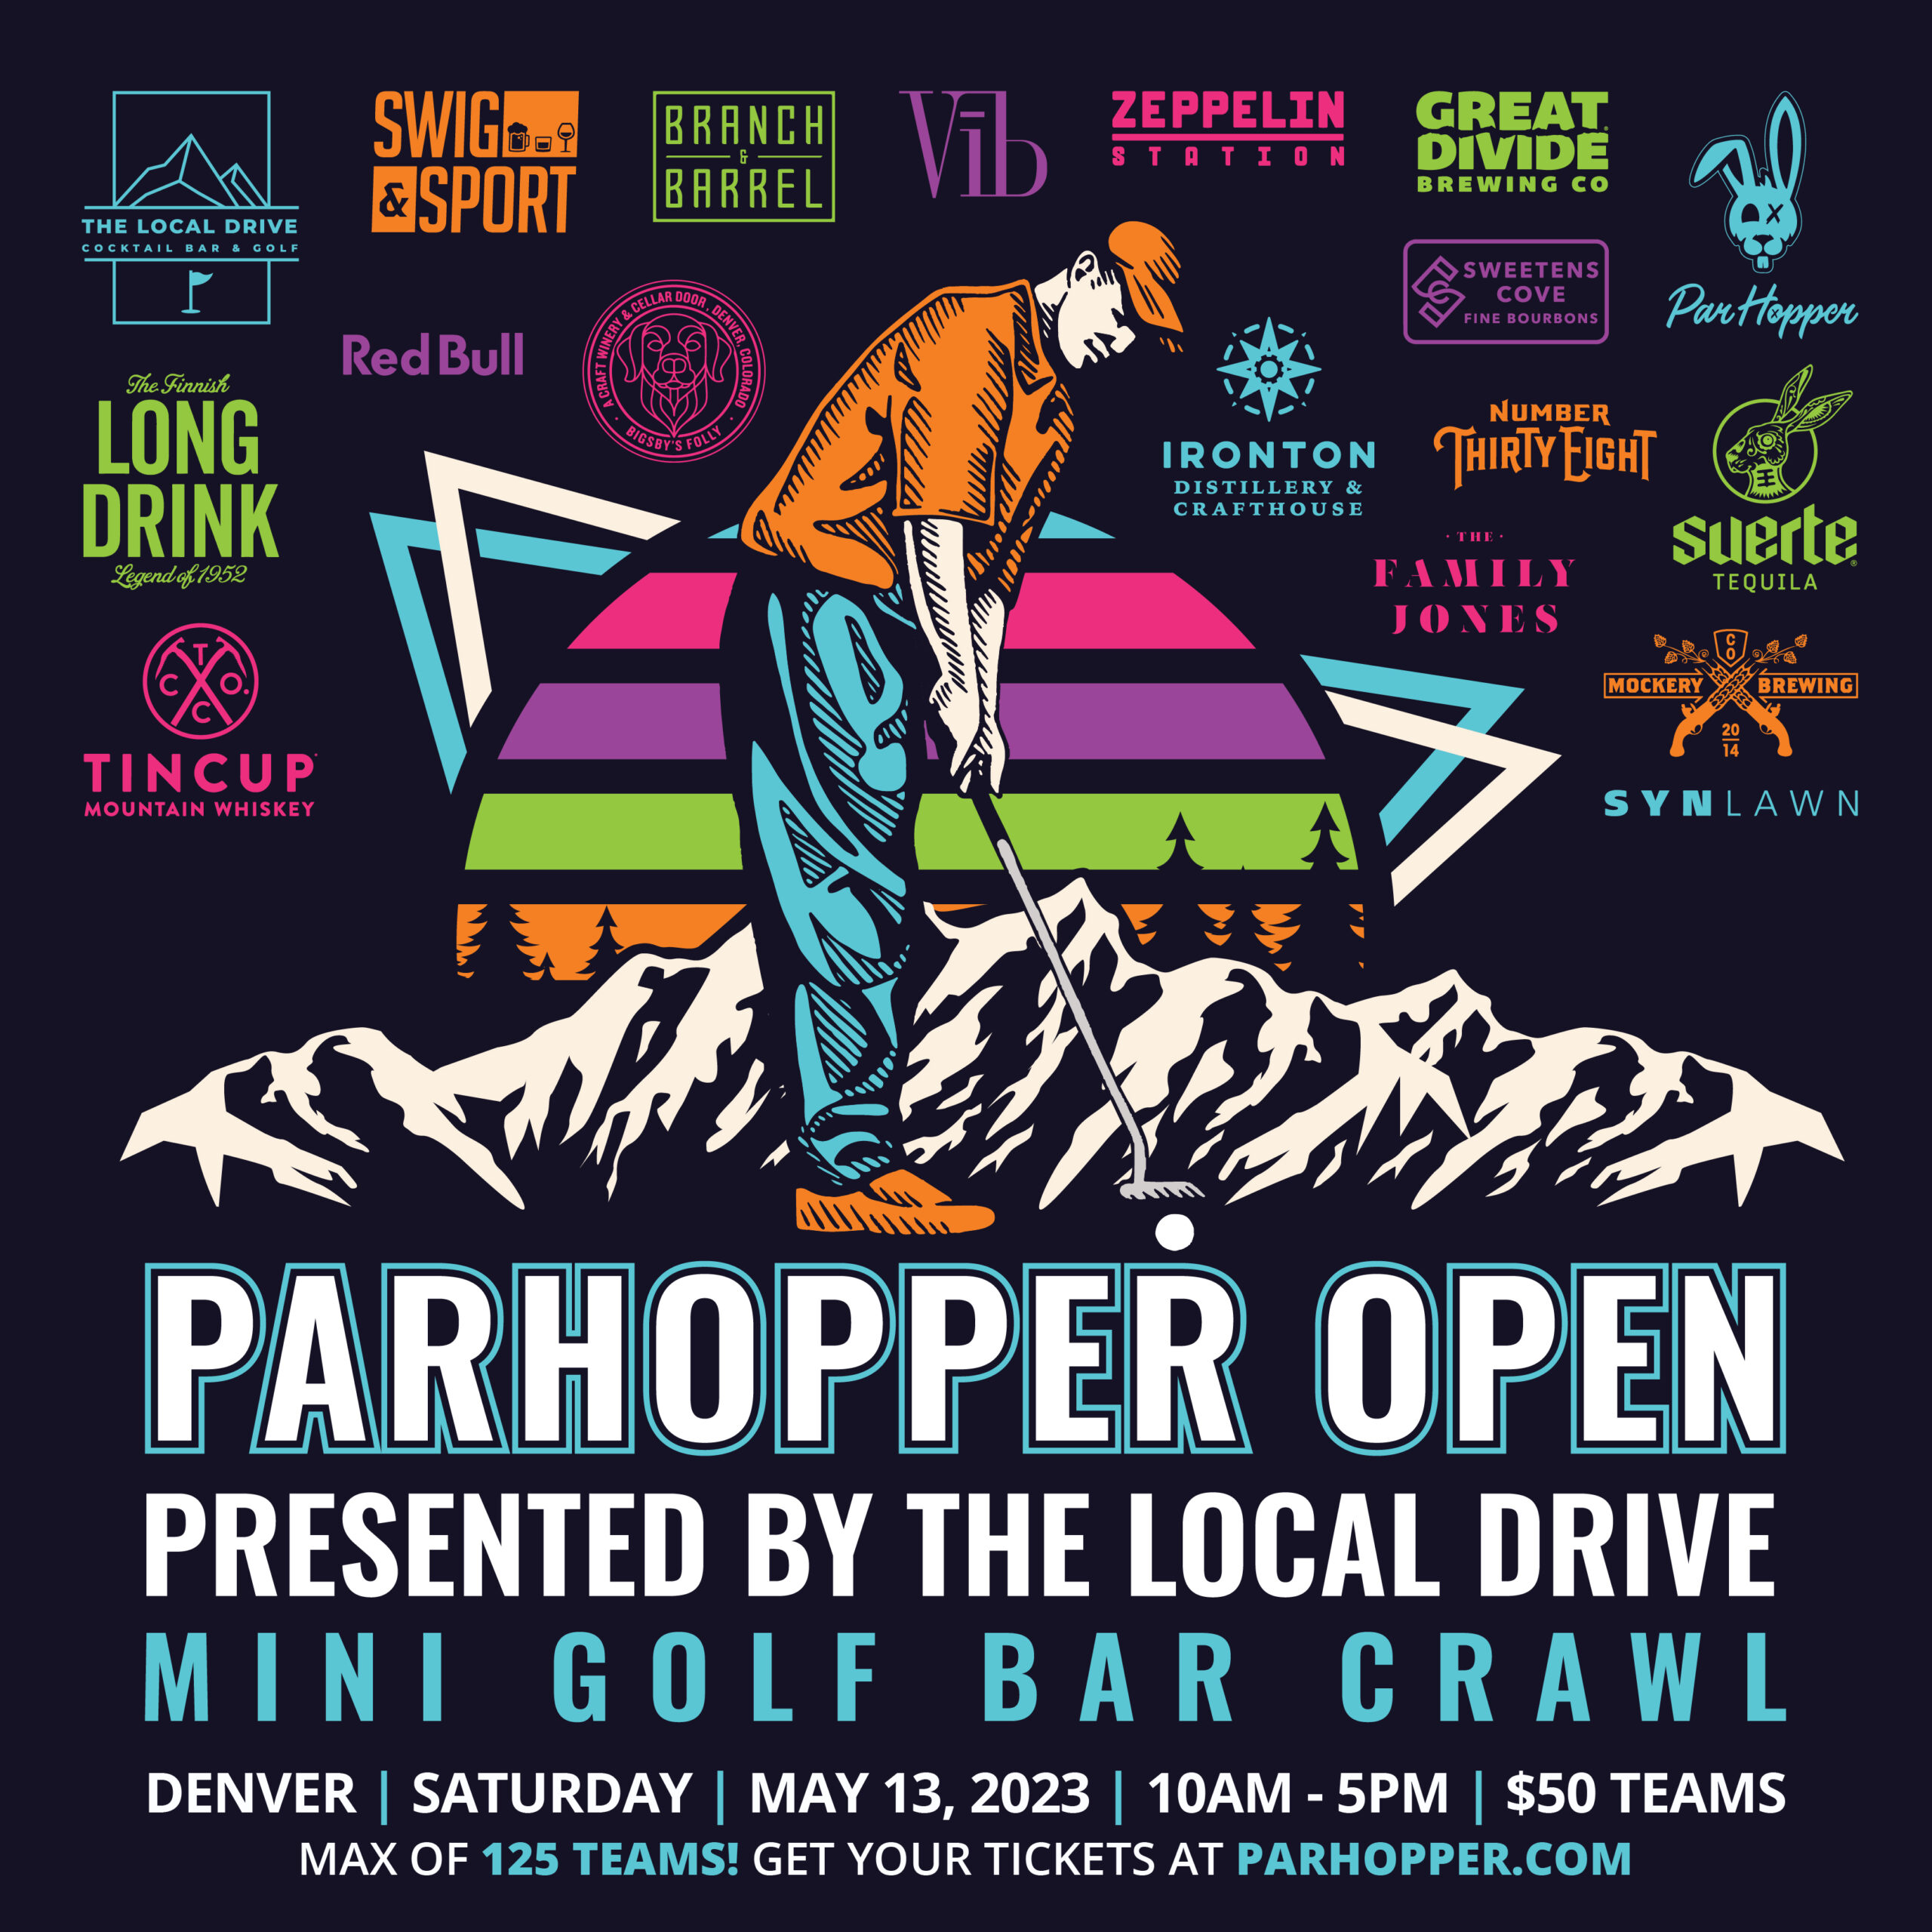 the parhopper open mini golf event